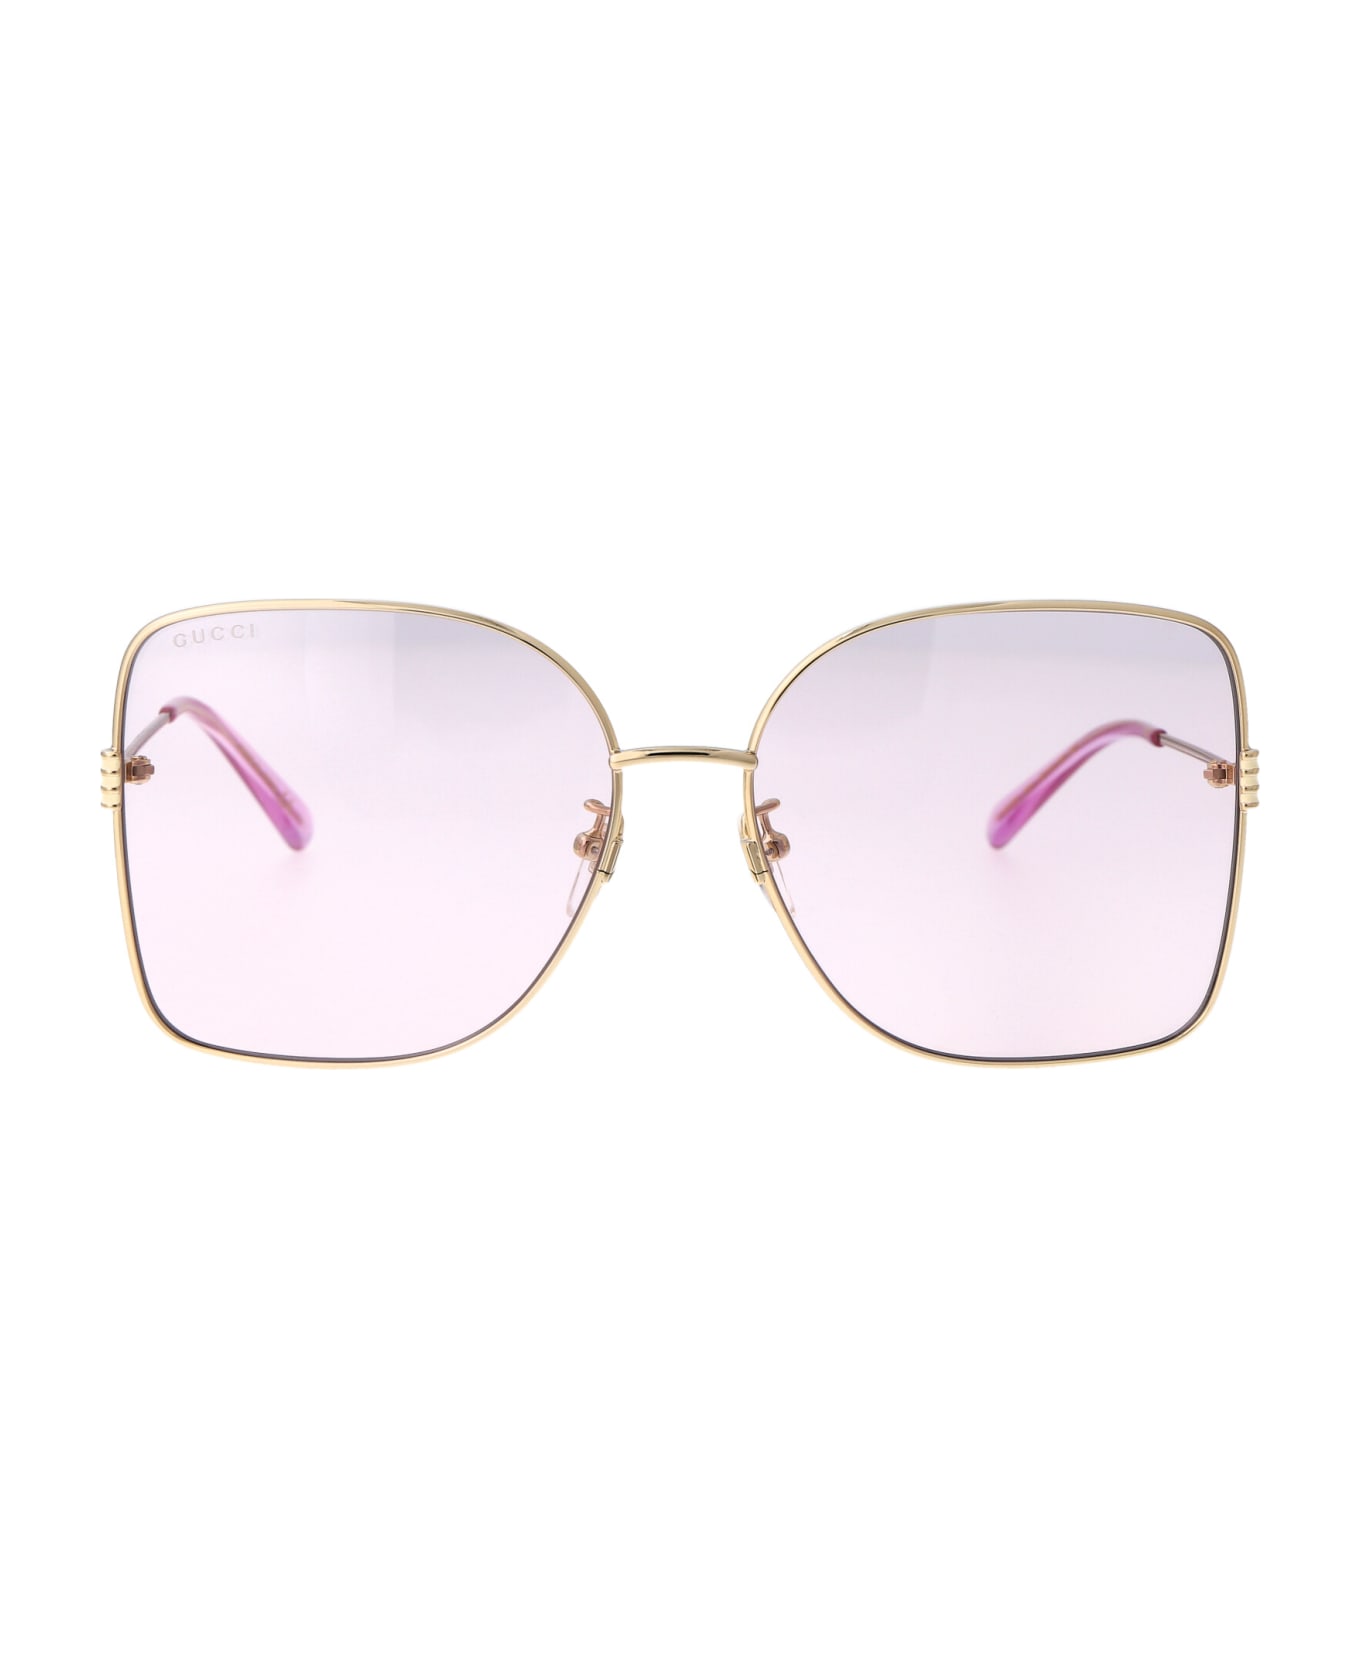 Gucci Eyewear Gg1282sa Sunglasses - 004 GOLD GOLD PINK